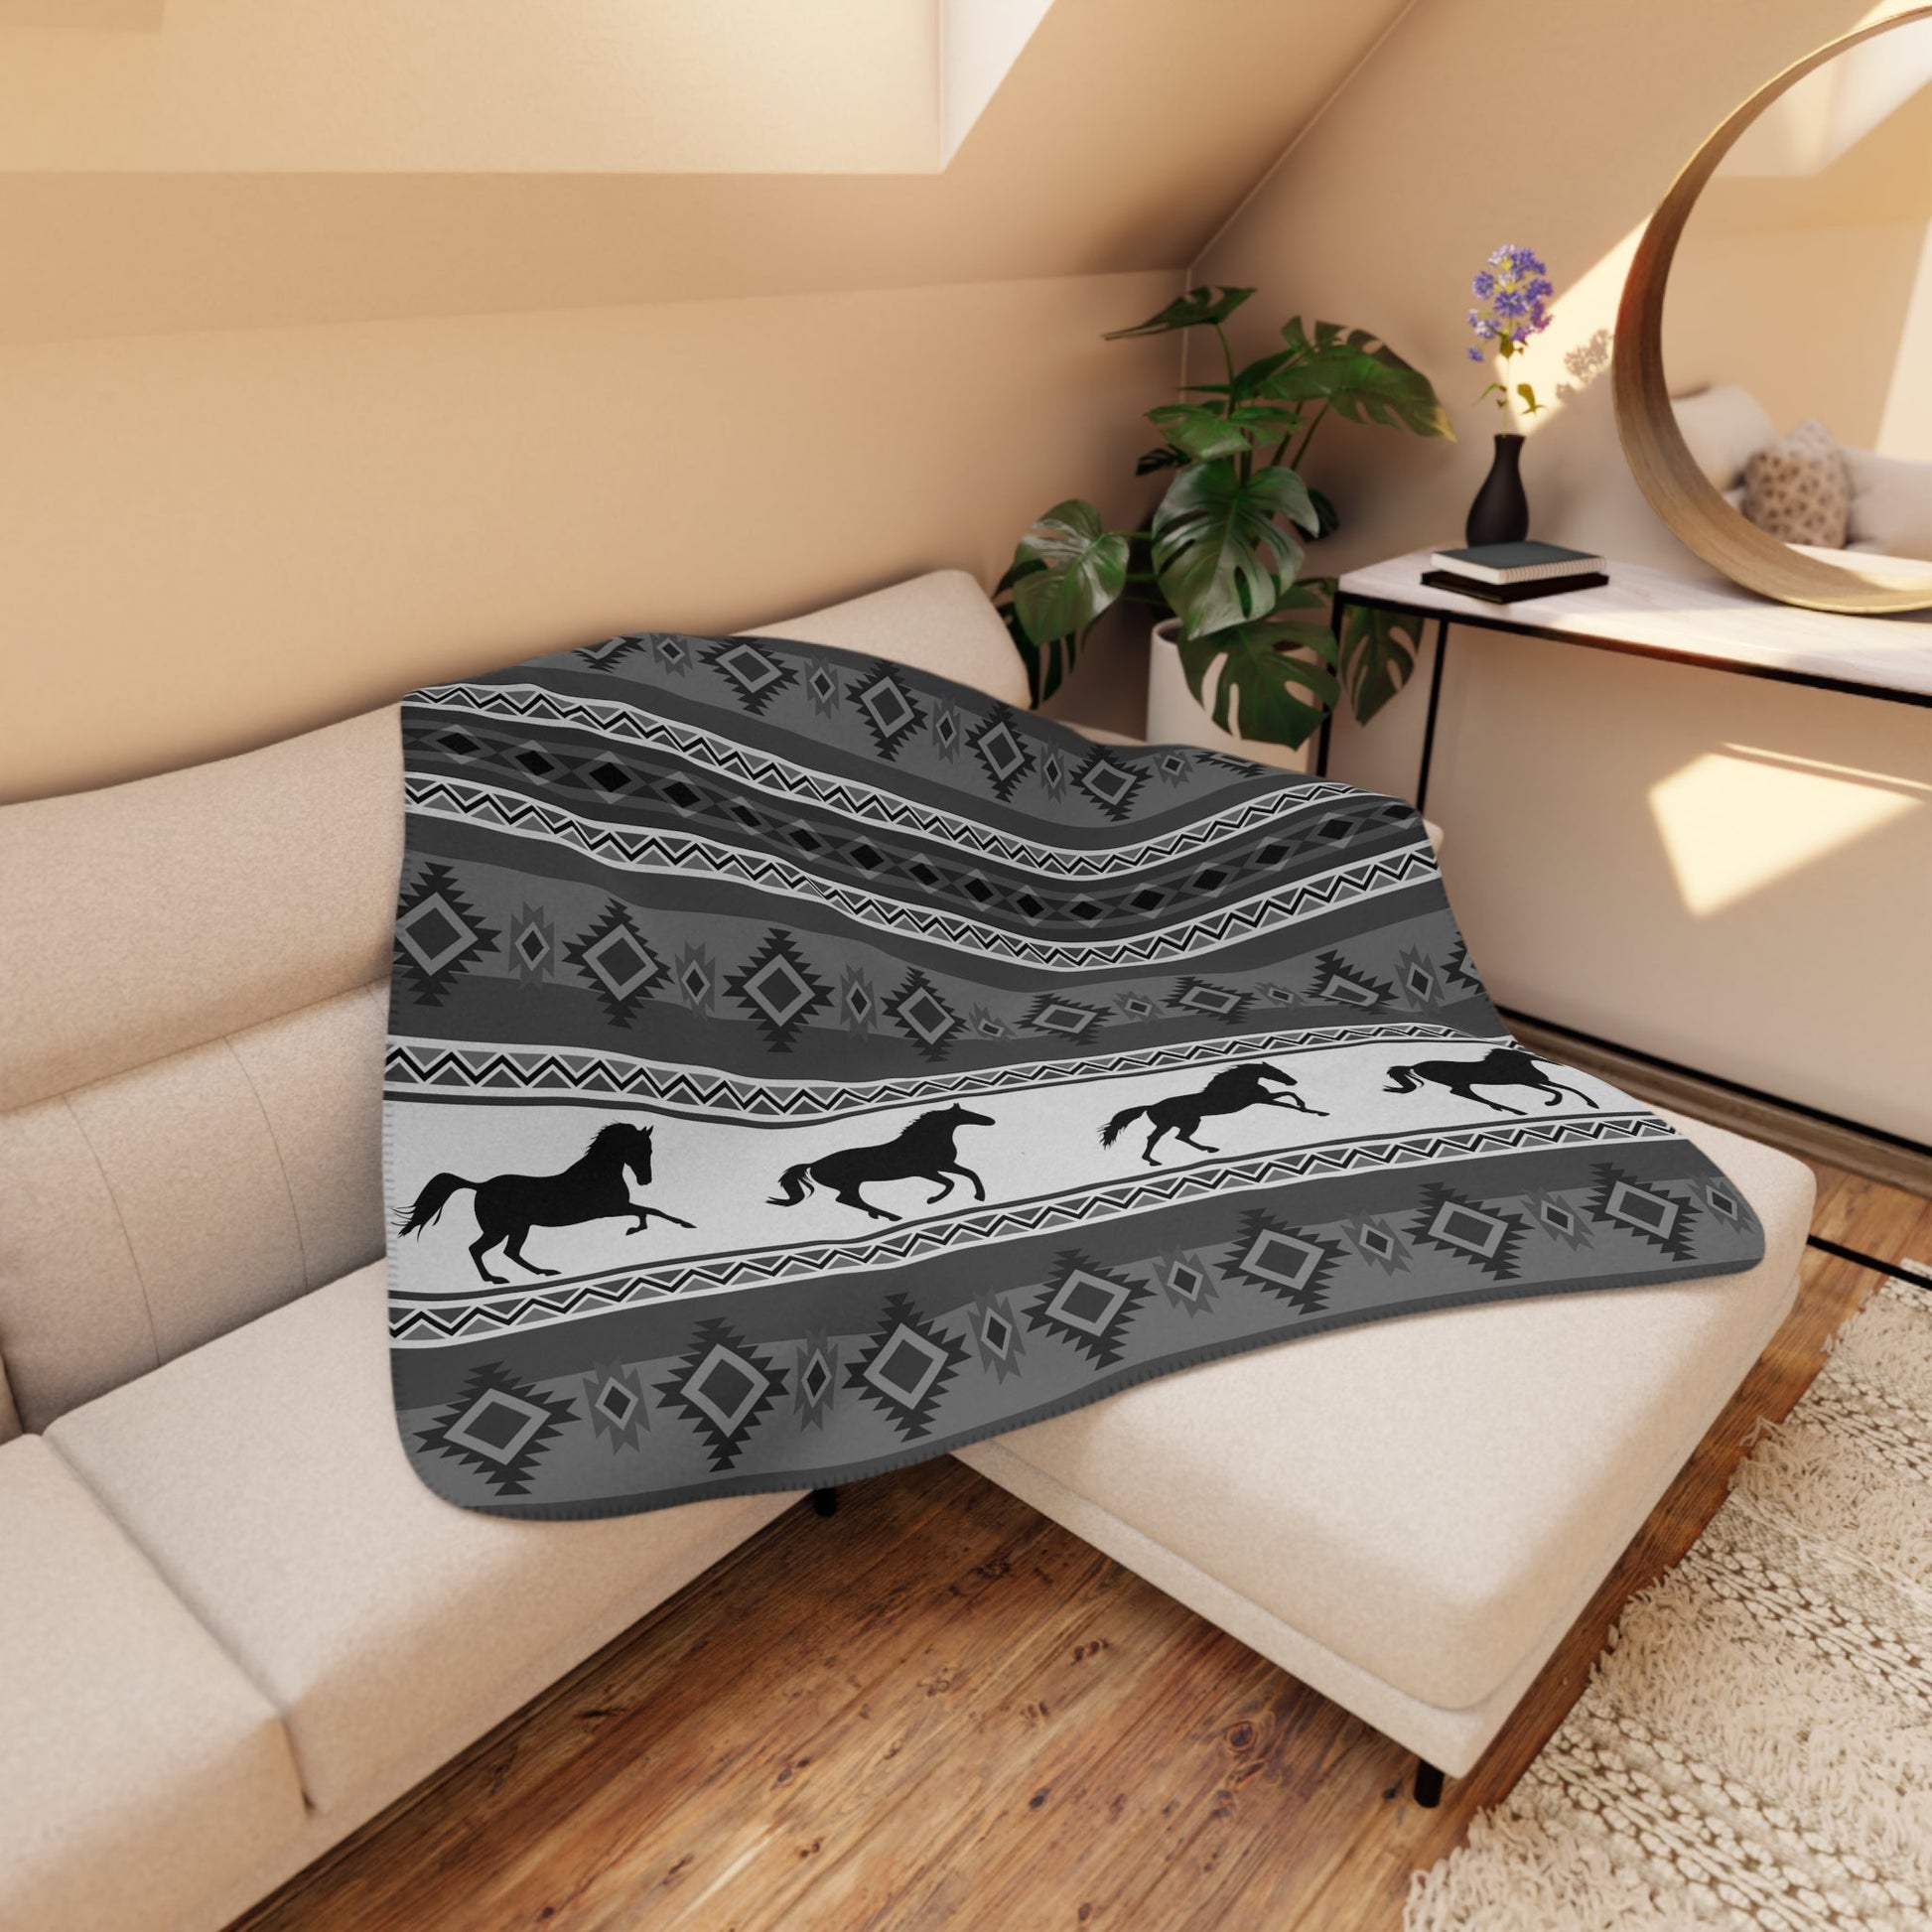 Southwest Native American Pattern Sherpa Blanket - Black and White Navaho Inspired Tribal Design - FlooredByArt